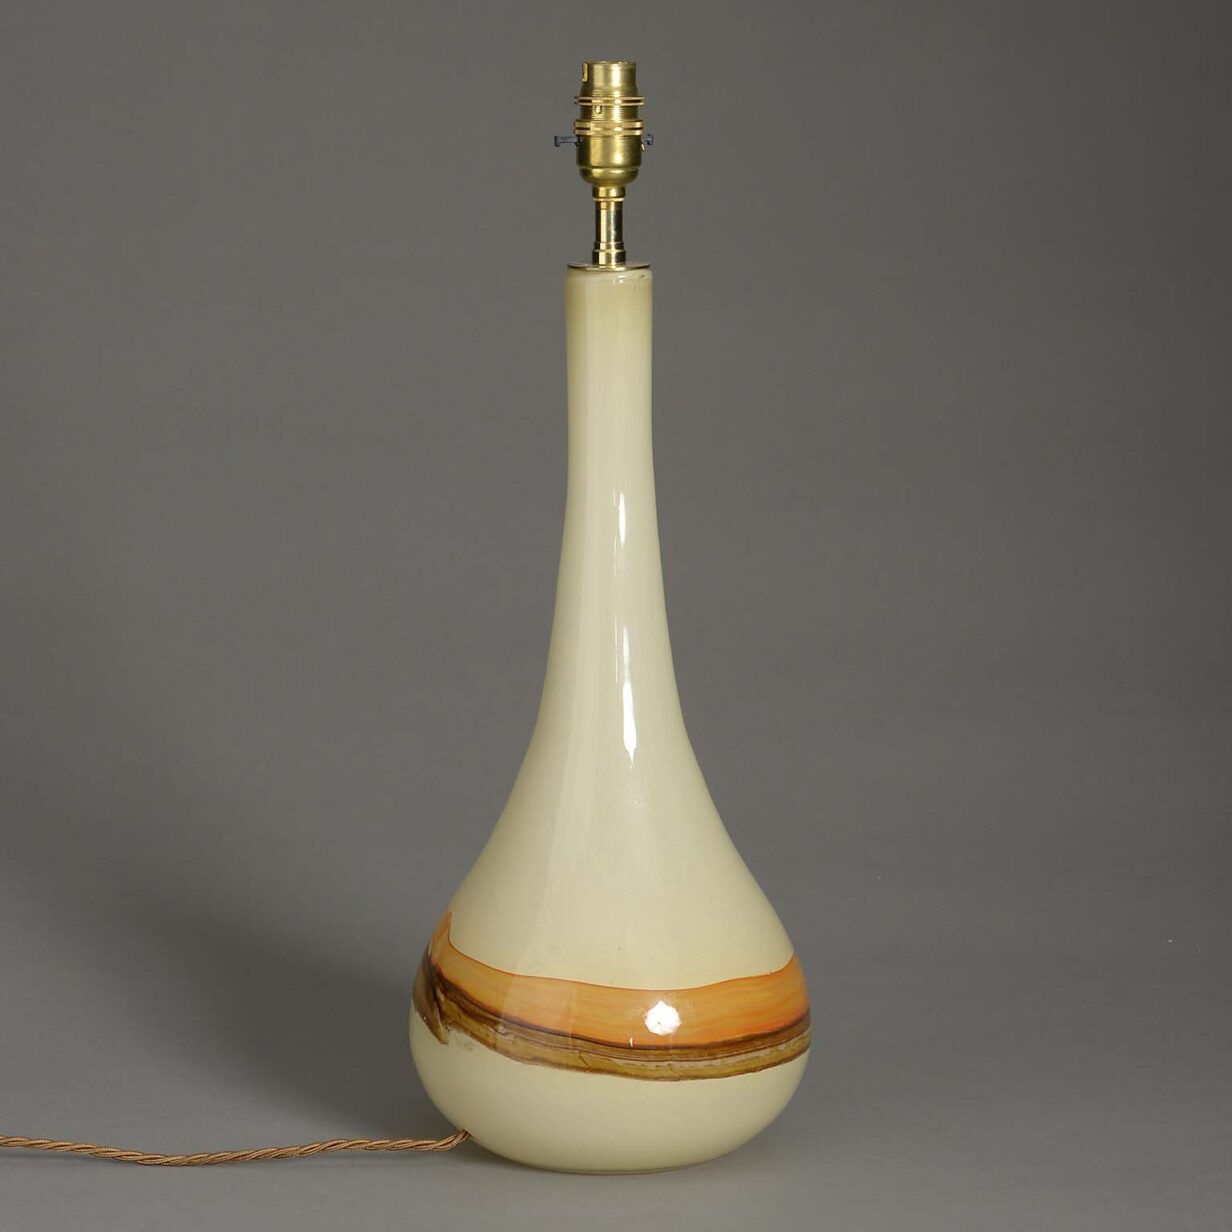 Mid-20th century glass vase lamp